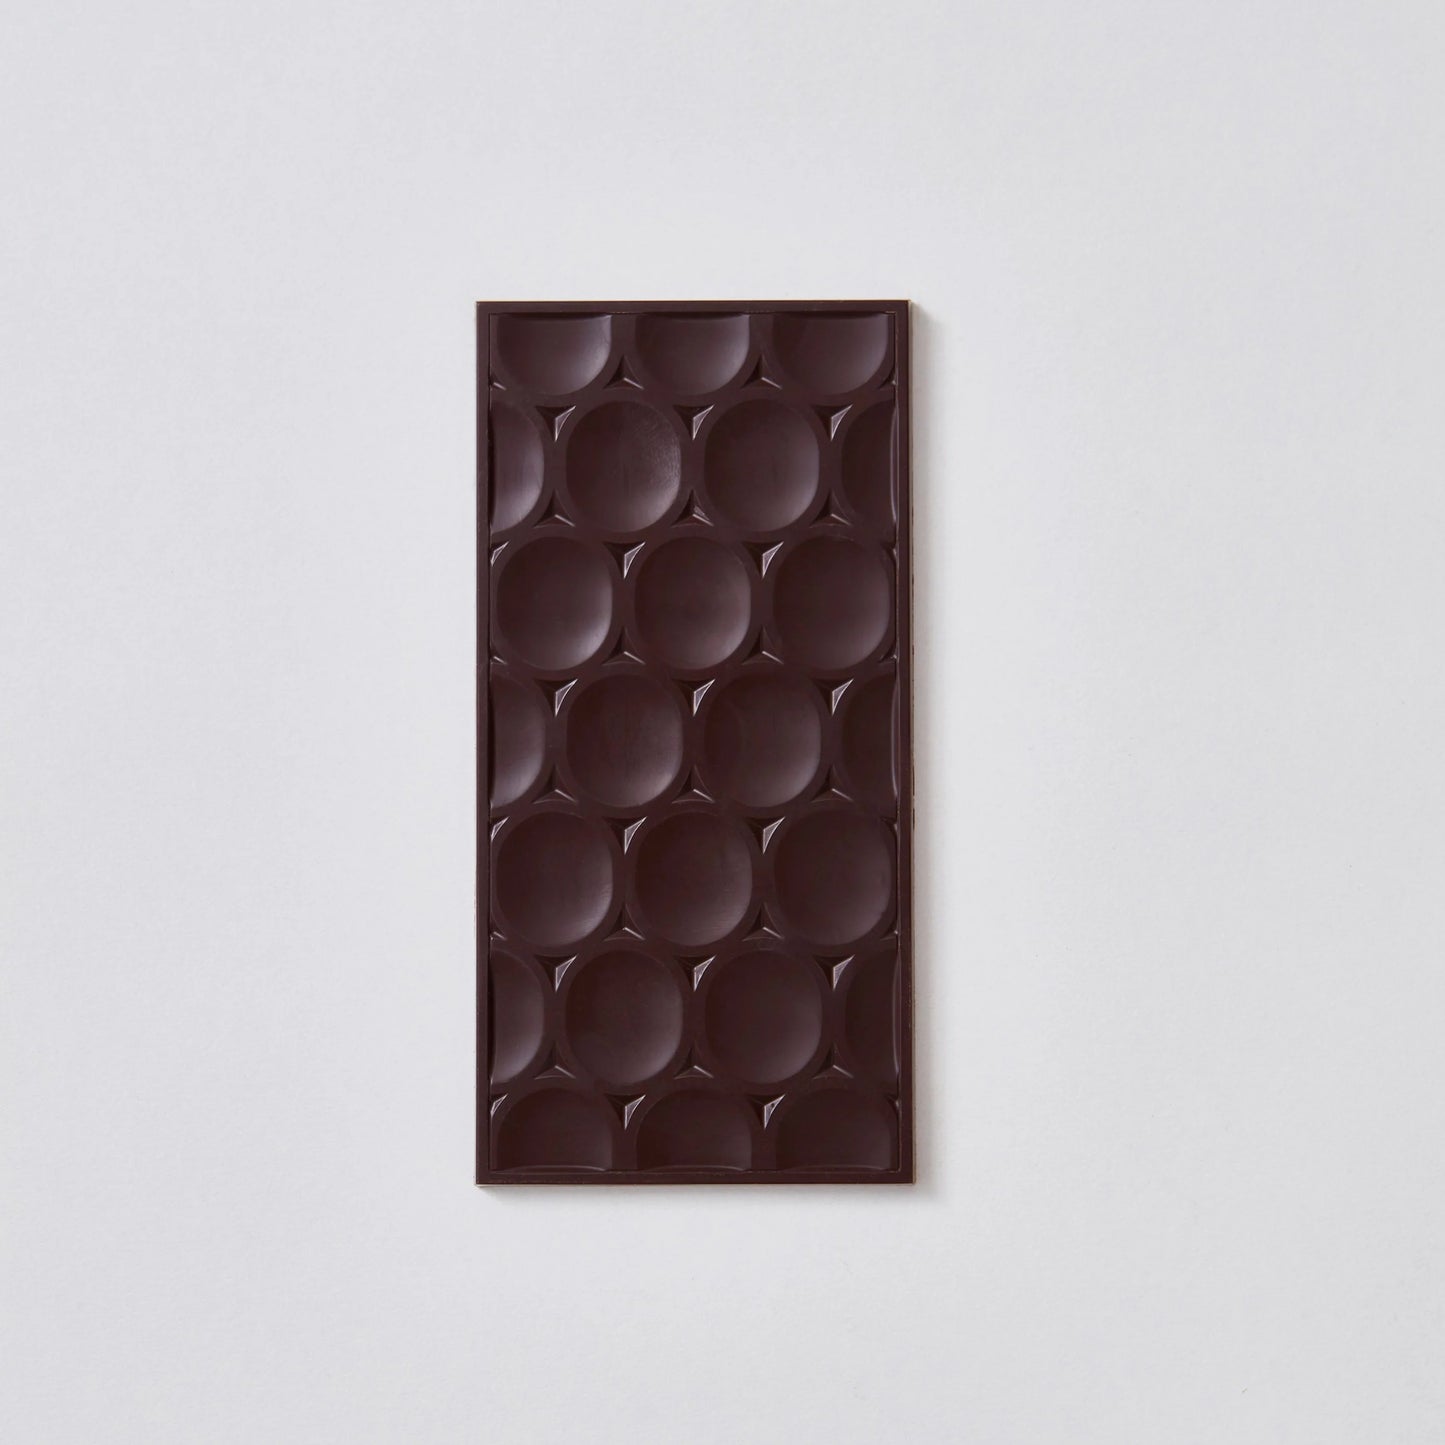 Hot Cross Bun Chocolate 70g - By Pump Street Chocolate